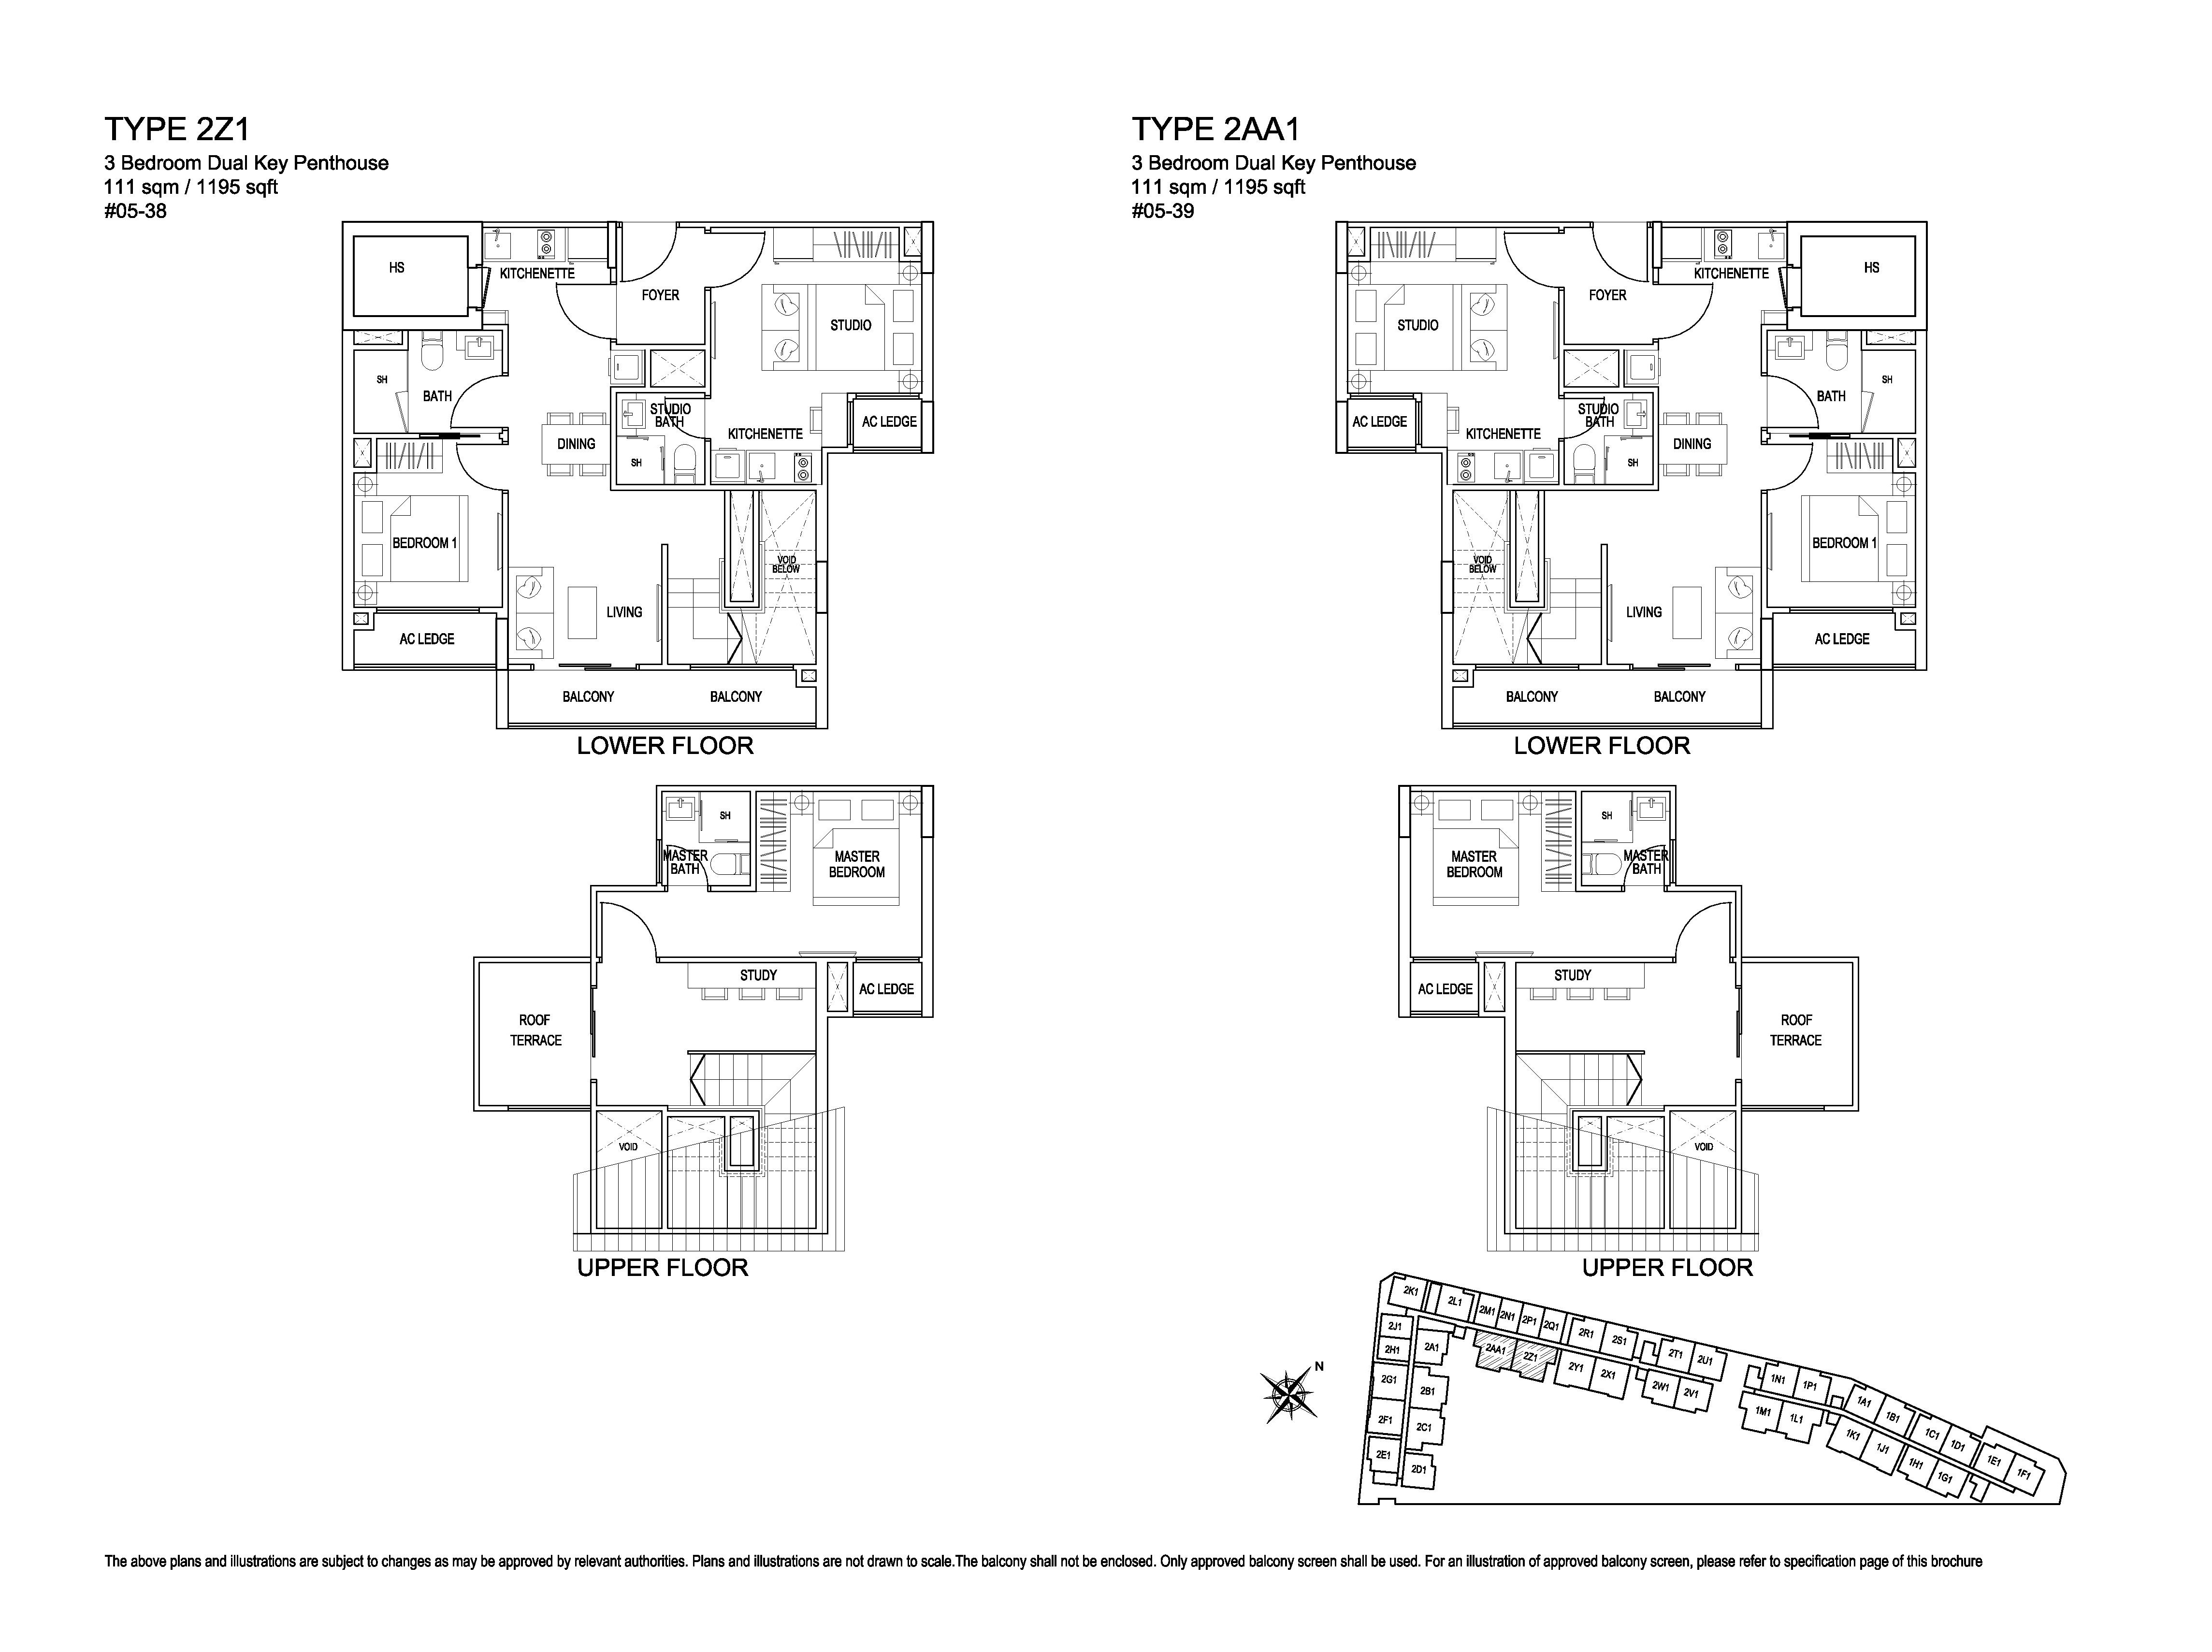 Kensington Square 3 Bedroom Dual Key Penthouse Floor Plans Type 2Z1, 2AA1